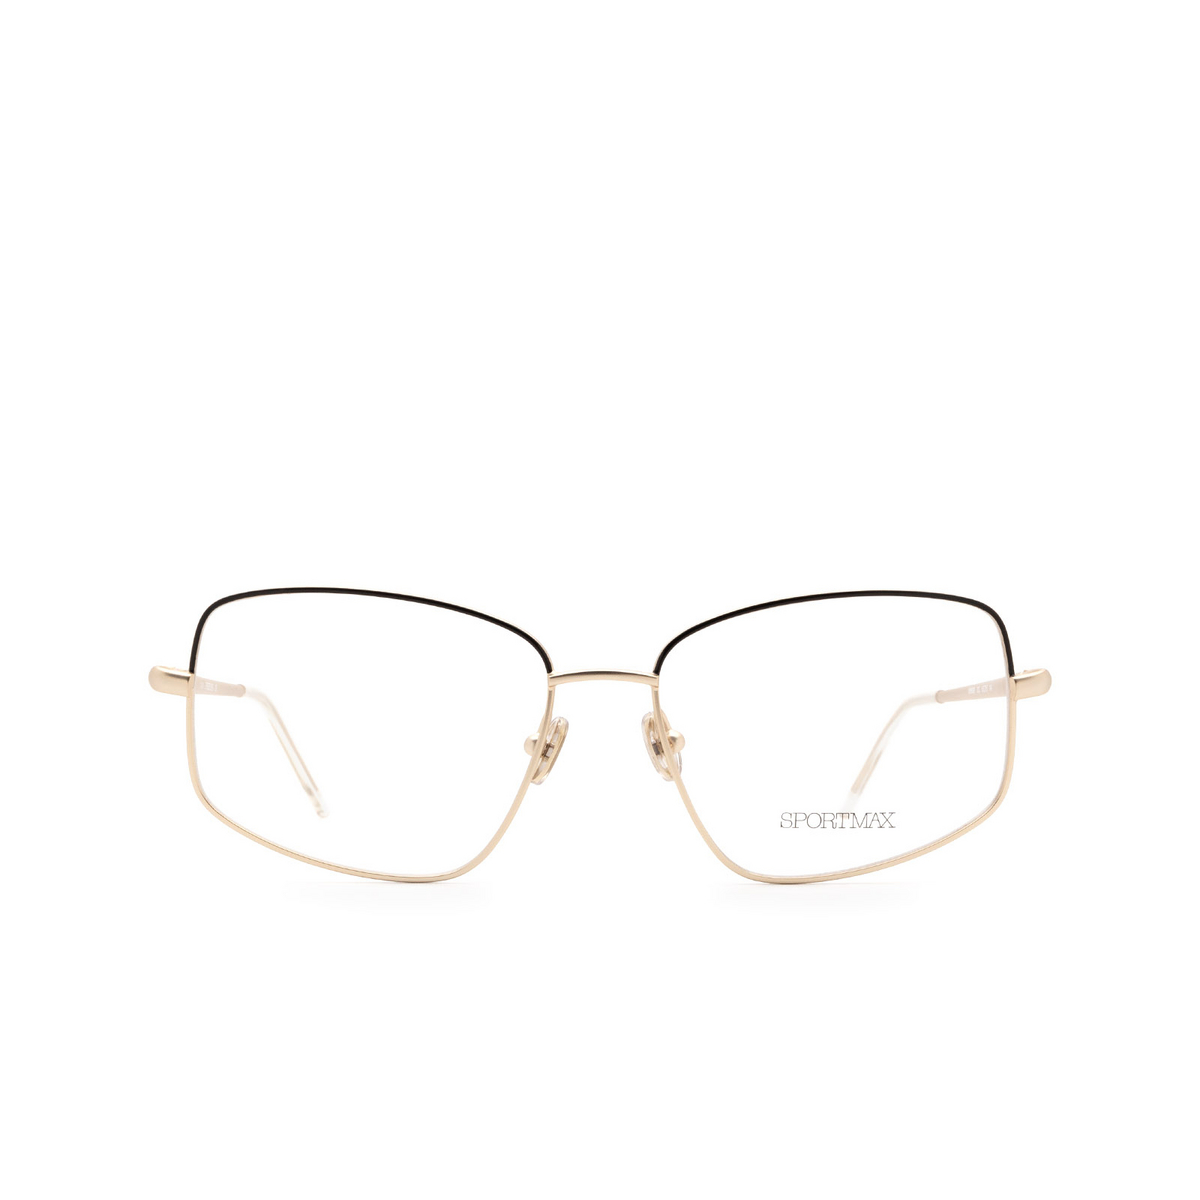 Sportmax® Square Eyeglasses: SM5008 color Light Gold 032 - front view.